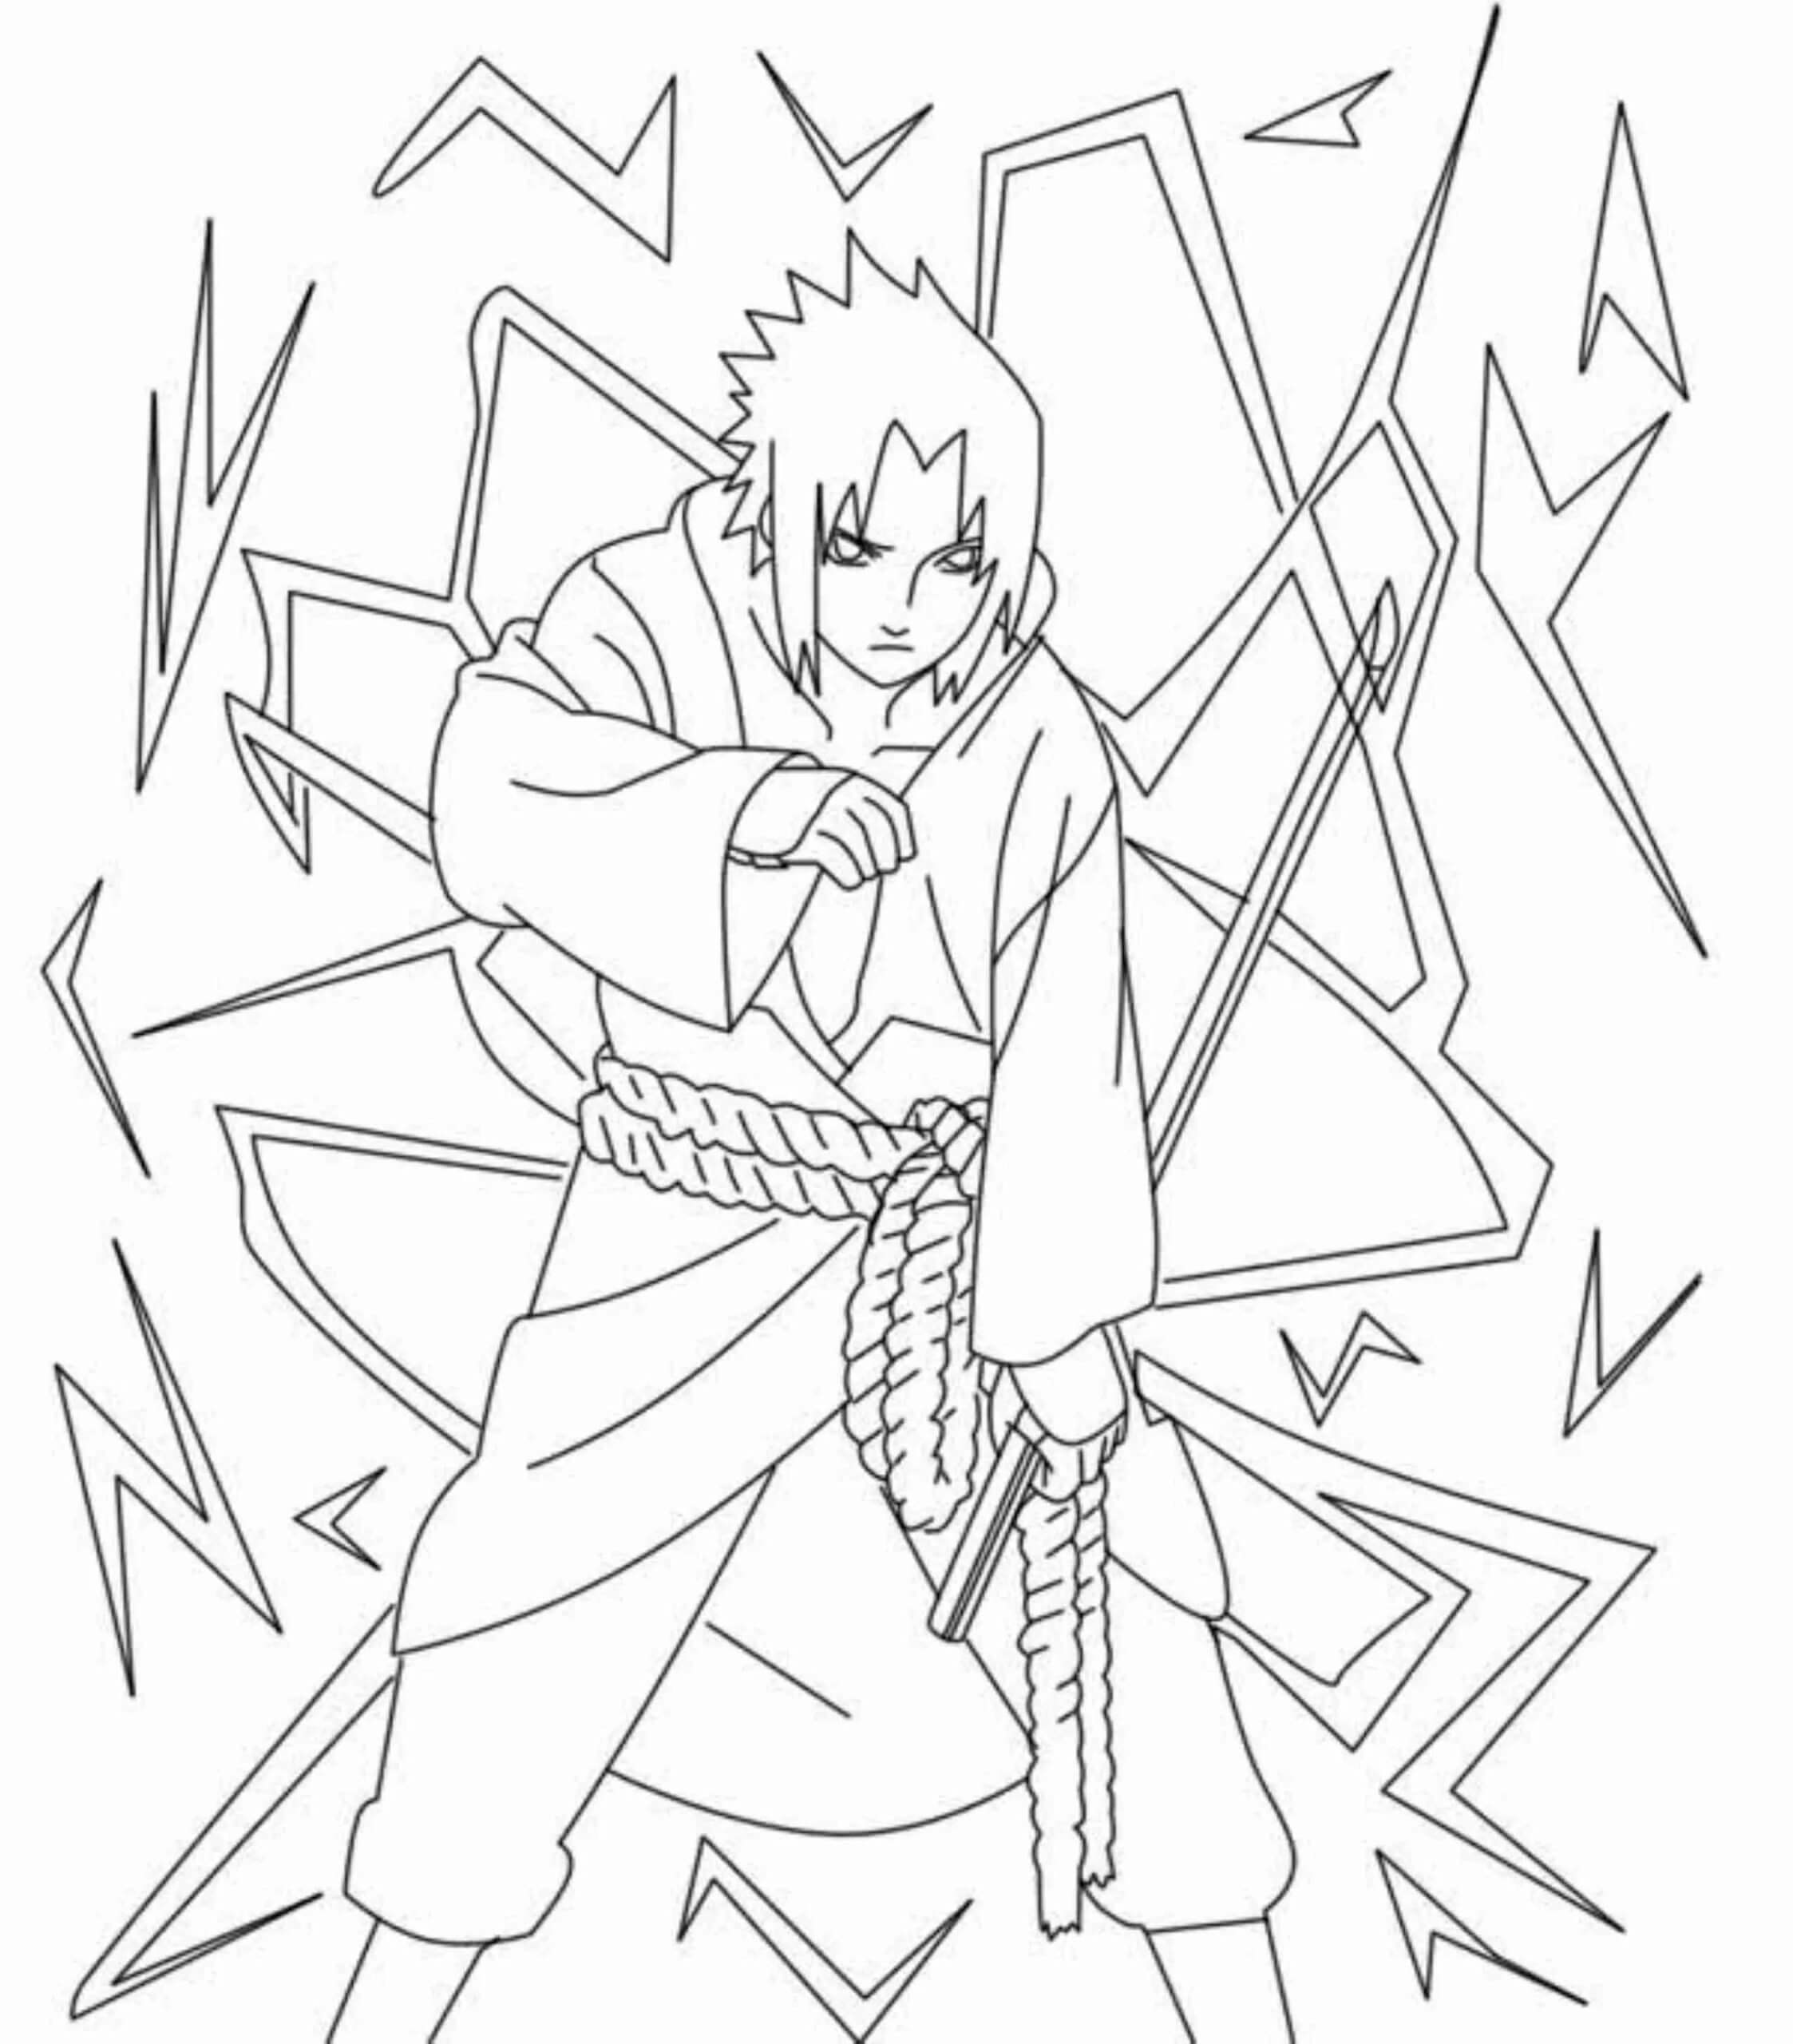 Genial Uchiha Sasuke Para Colorear Imprimir E Dibujar Dibujos | Images ...